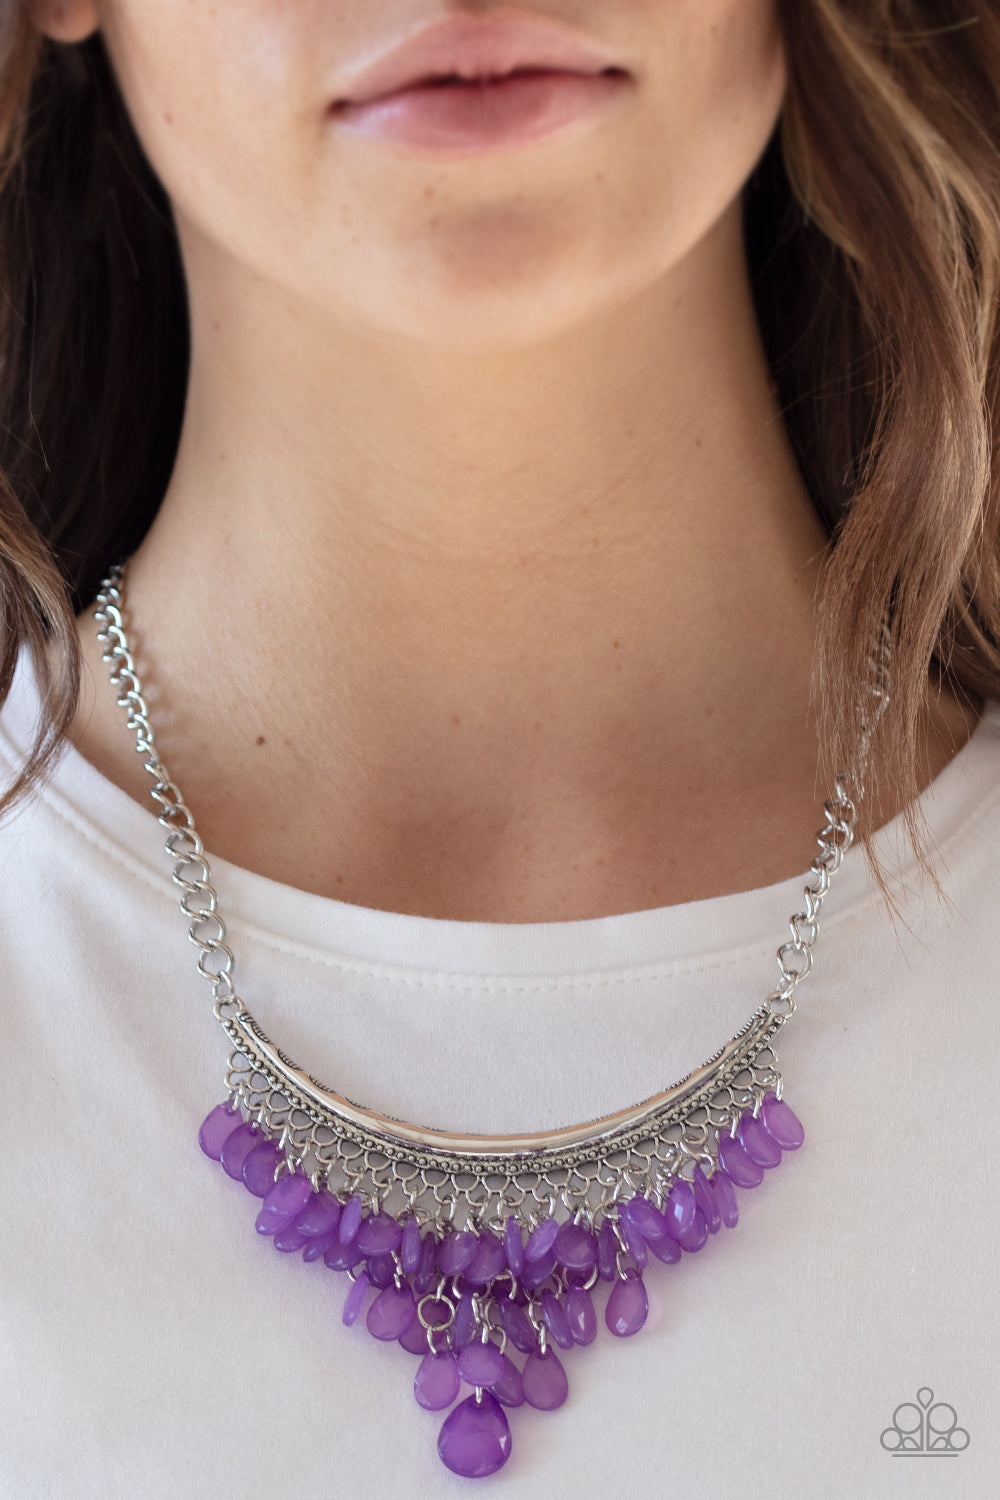 Bead Necklace - Paparazzi Rio Rainfall - Purple Teardrop Necklace Paparazzi jewelry image